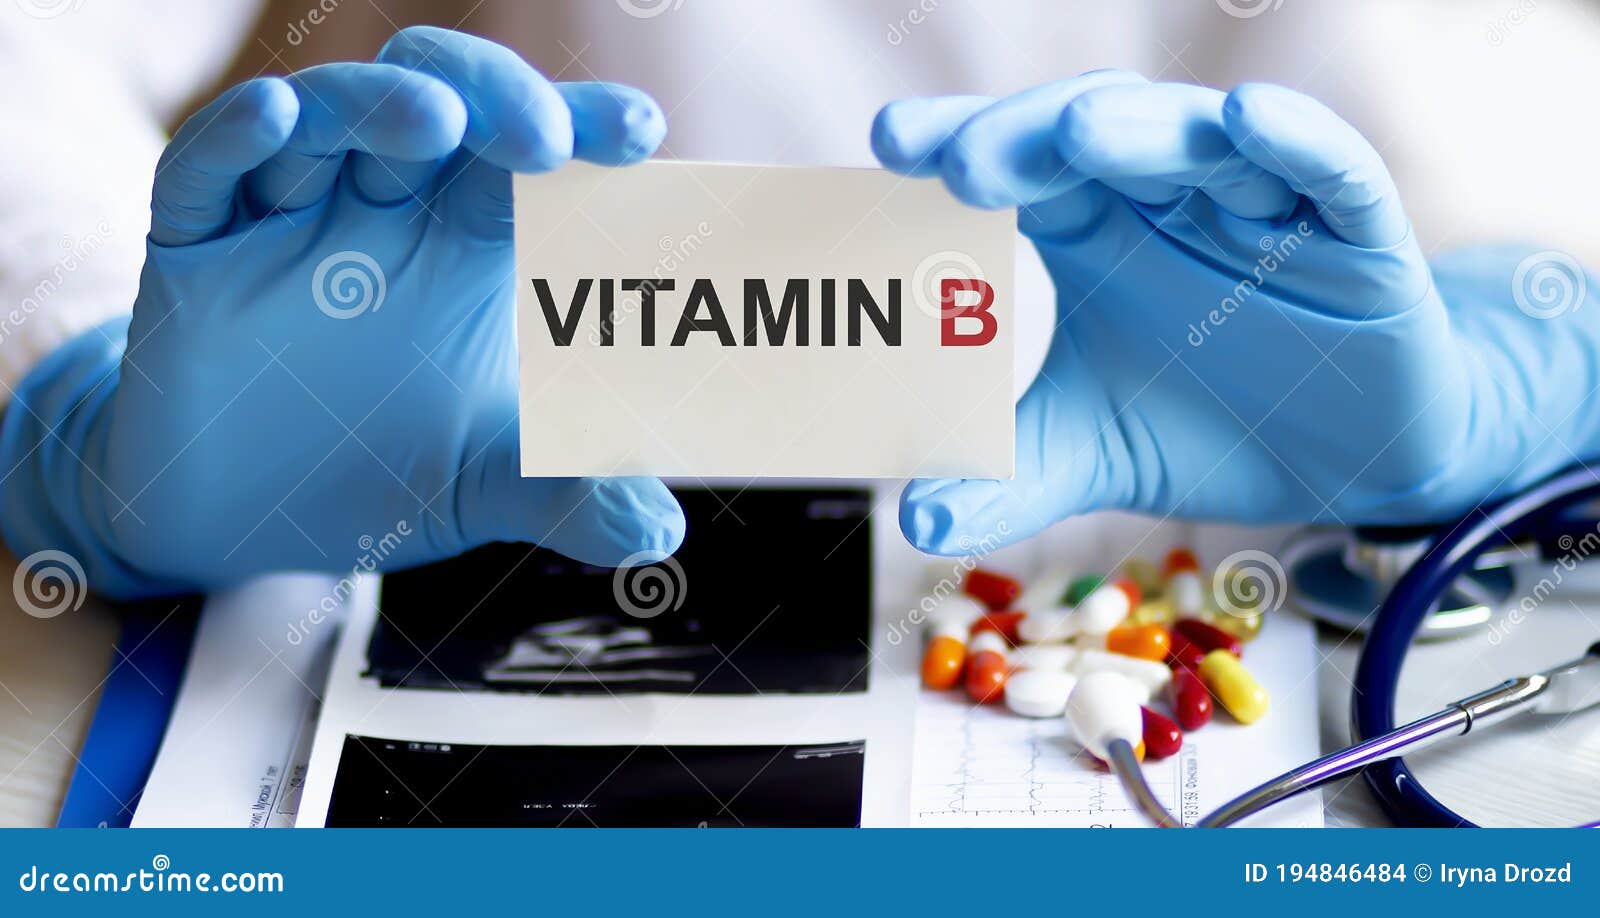 b- vitamin card)